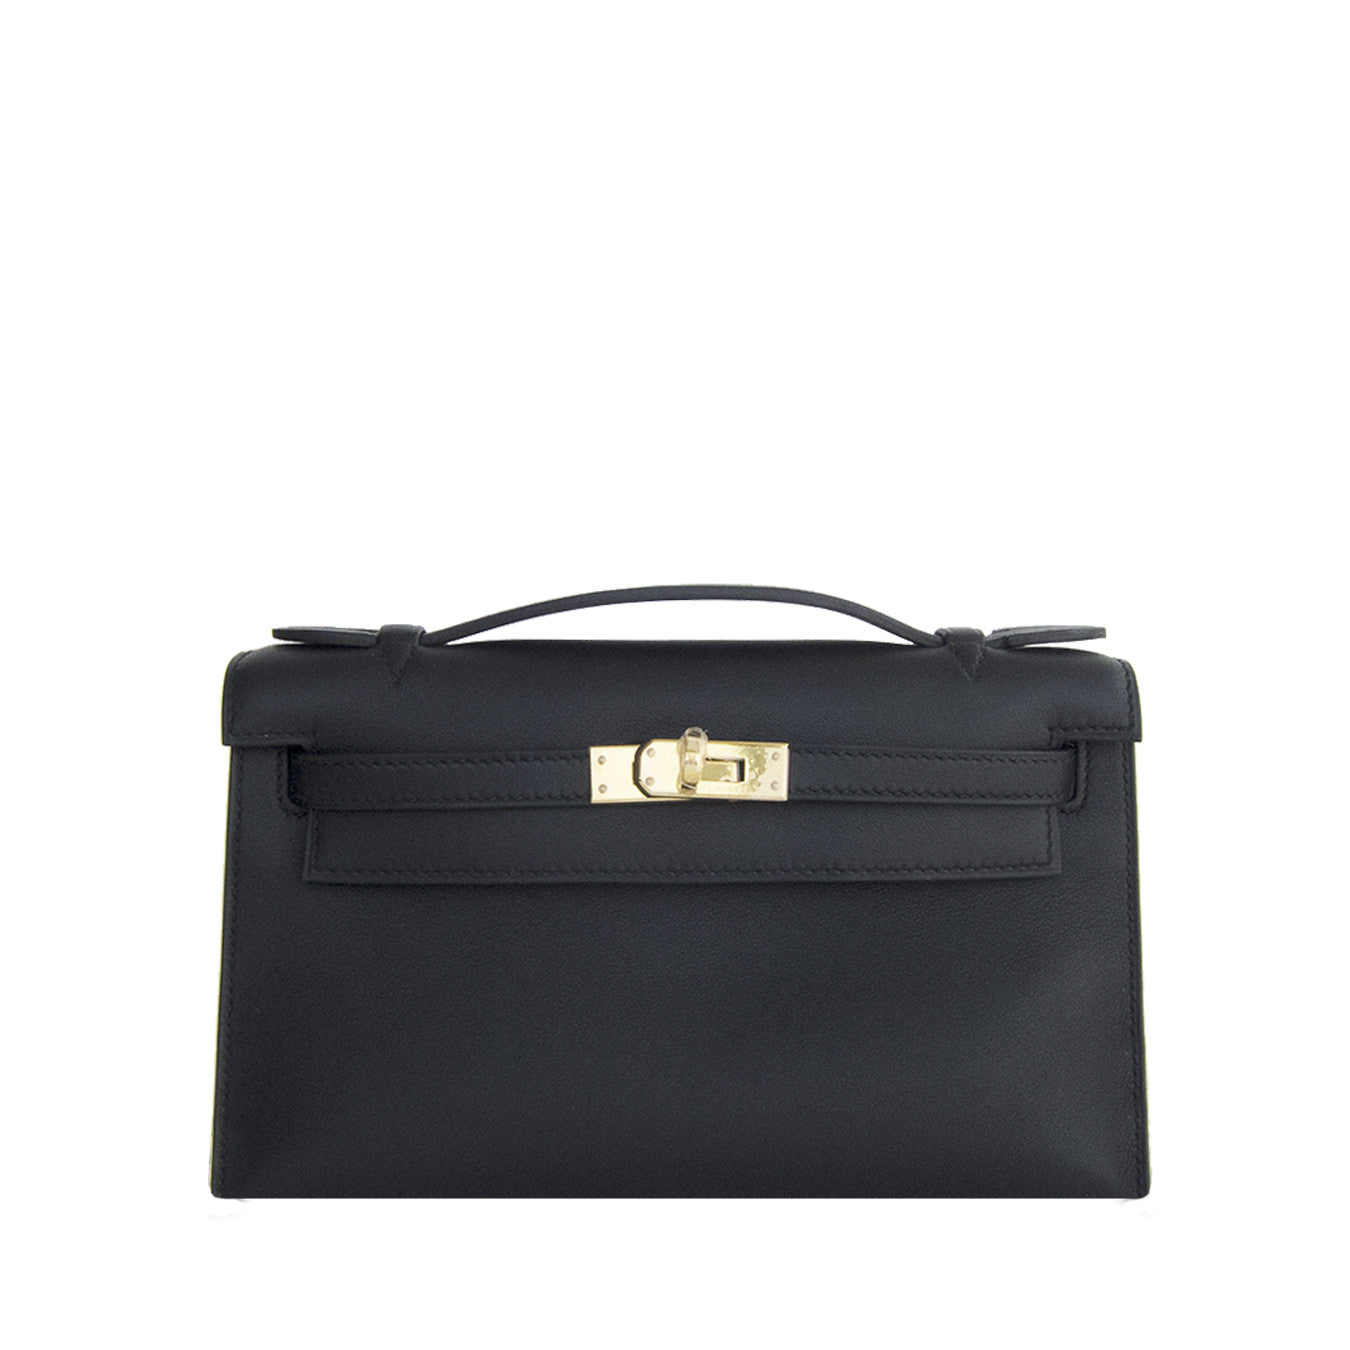 hermes kelly pochette clutch black swift gold hardware, birkin bag price range